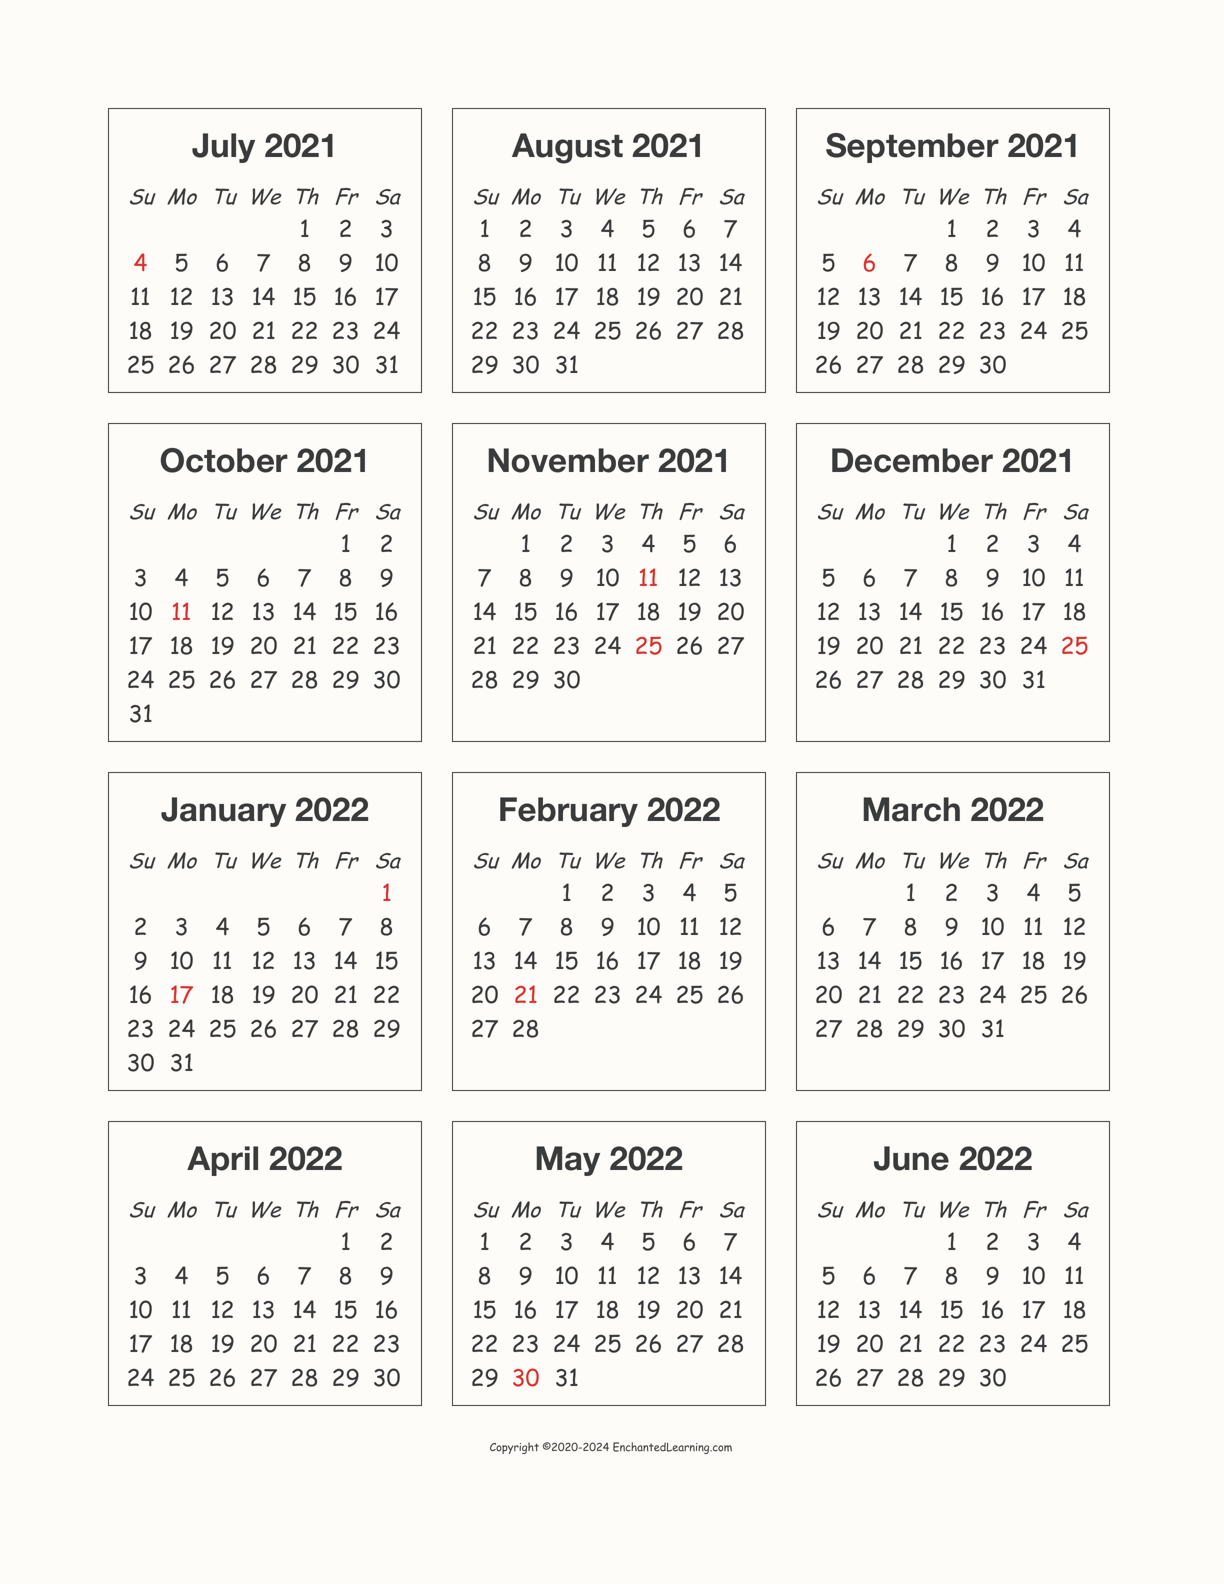 Uiuc 2023 Calendar - Recette 2023